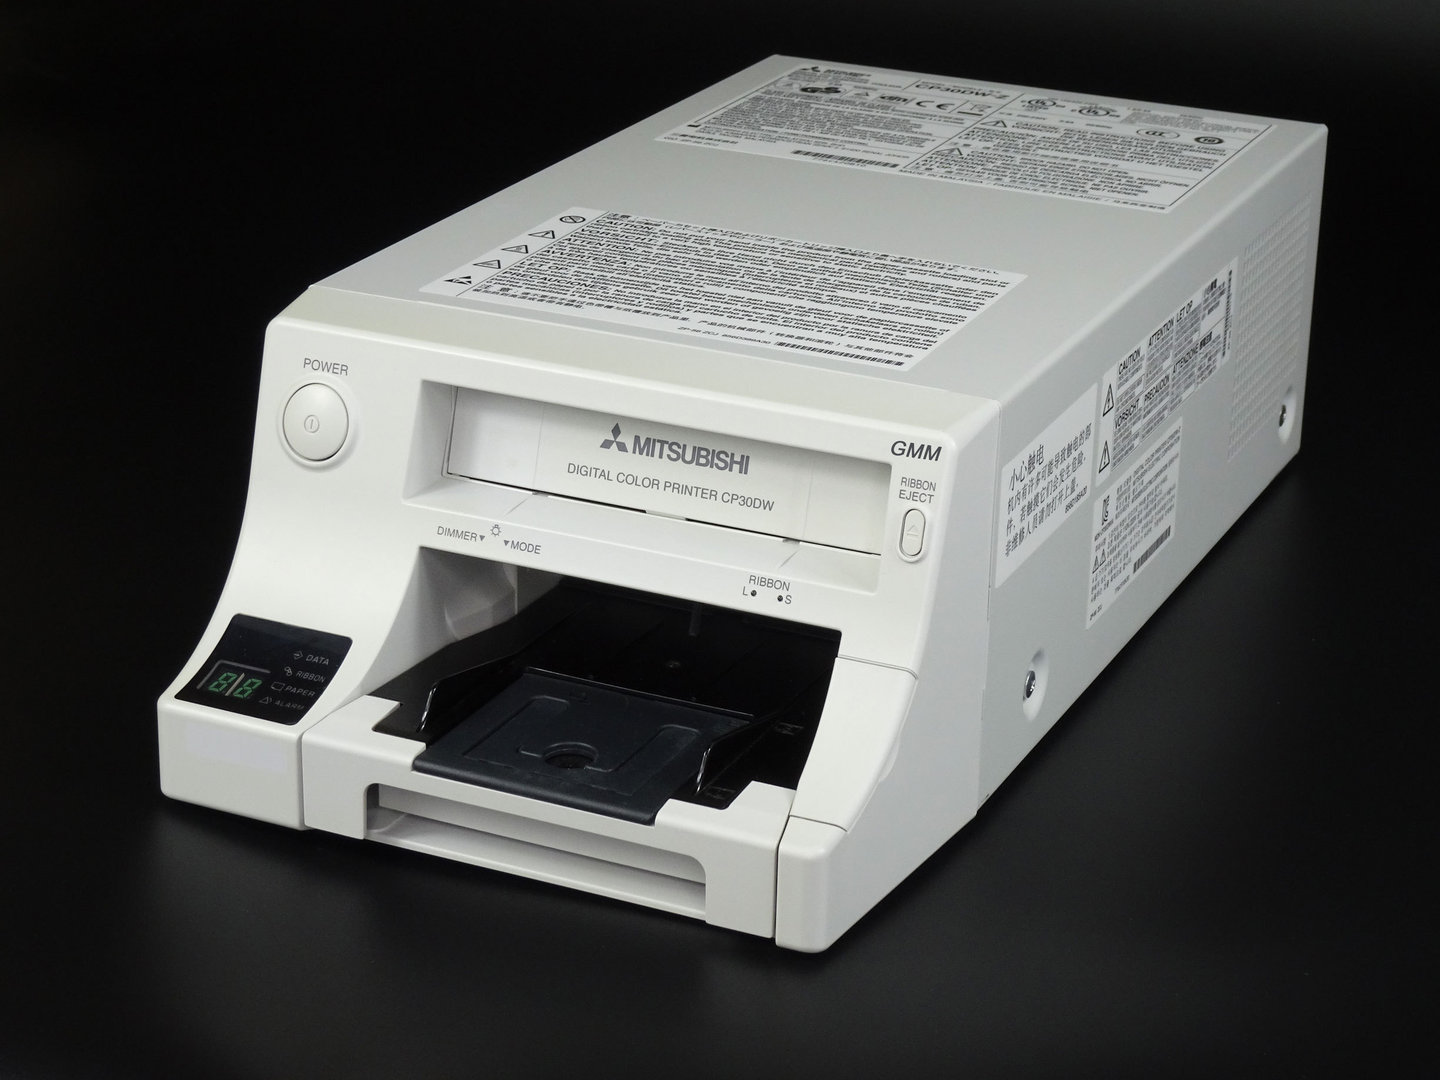 
Mitsubishi Digital Color Printer CP30DW